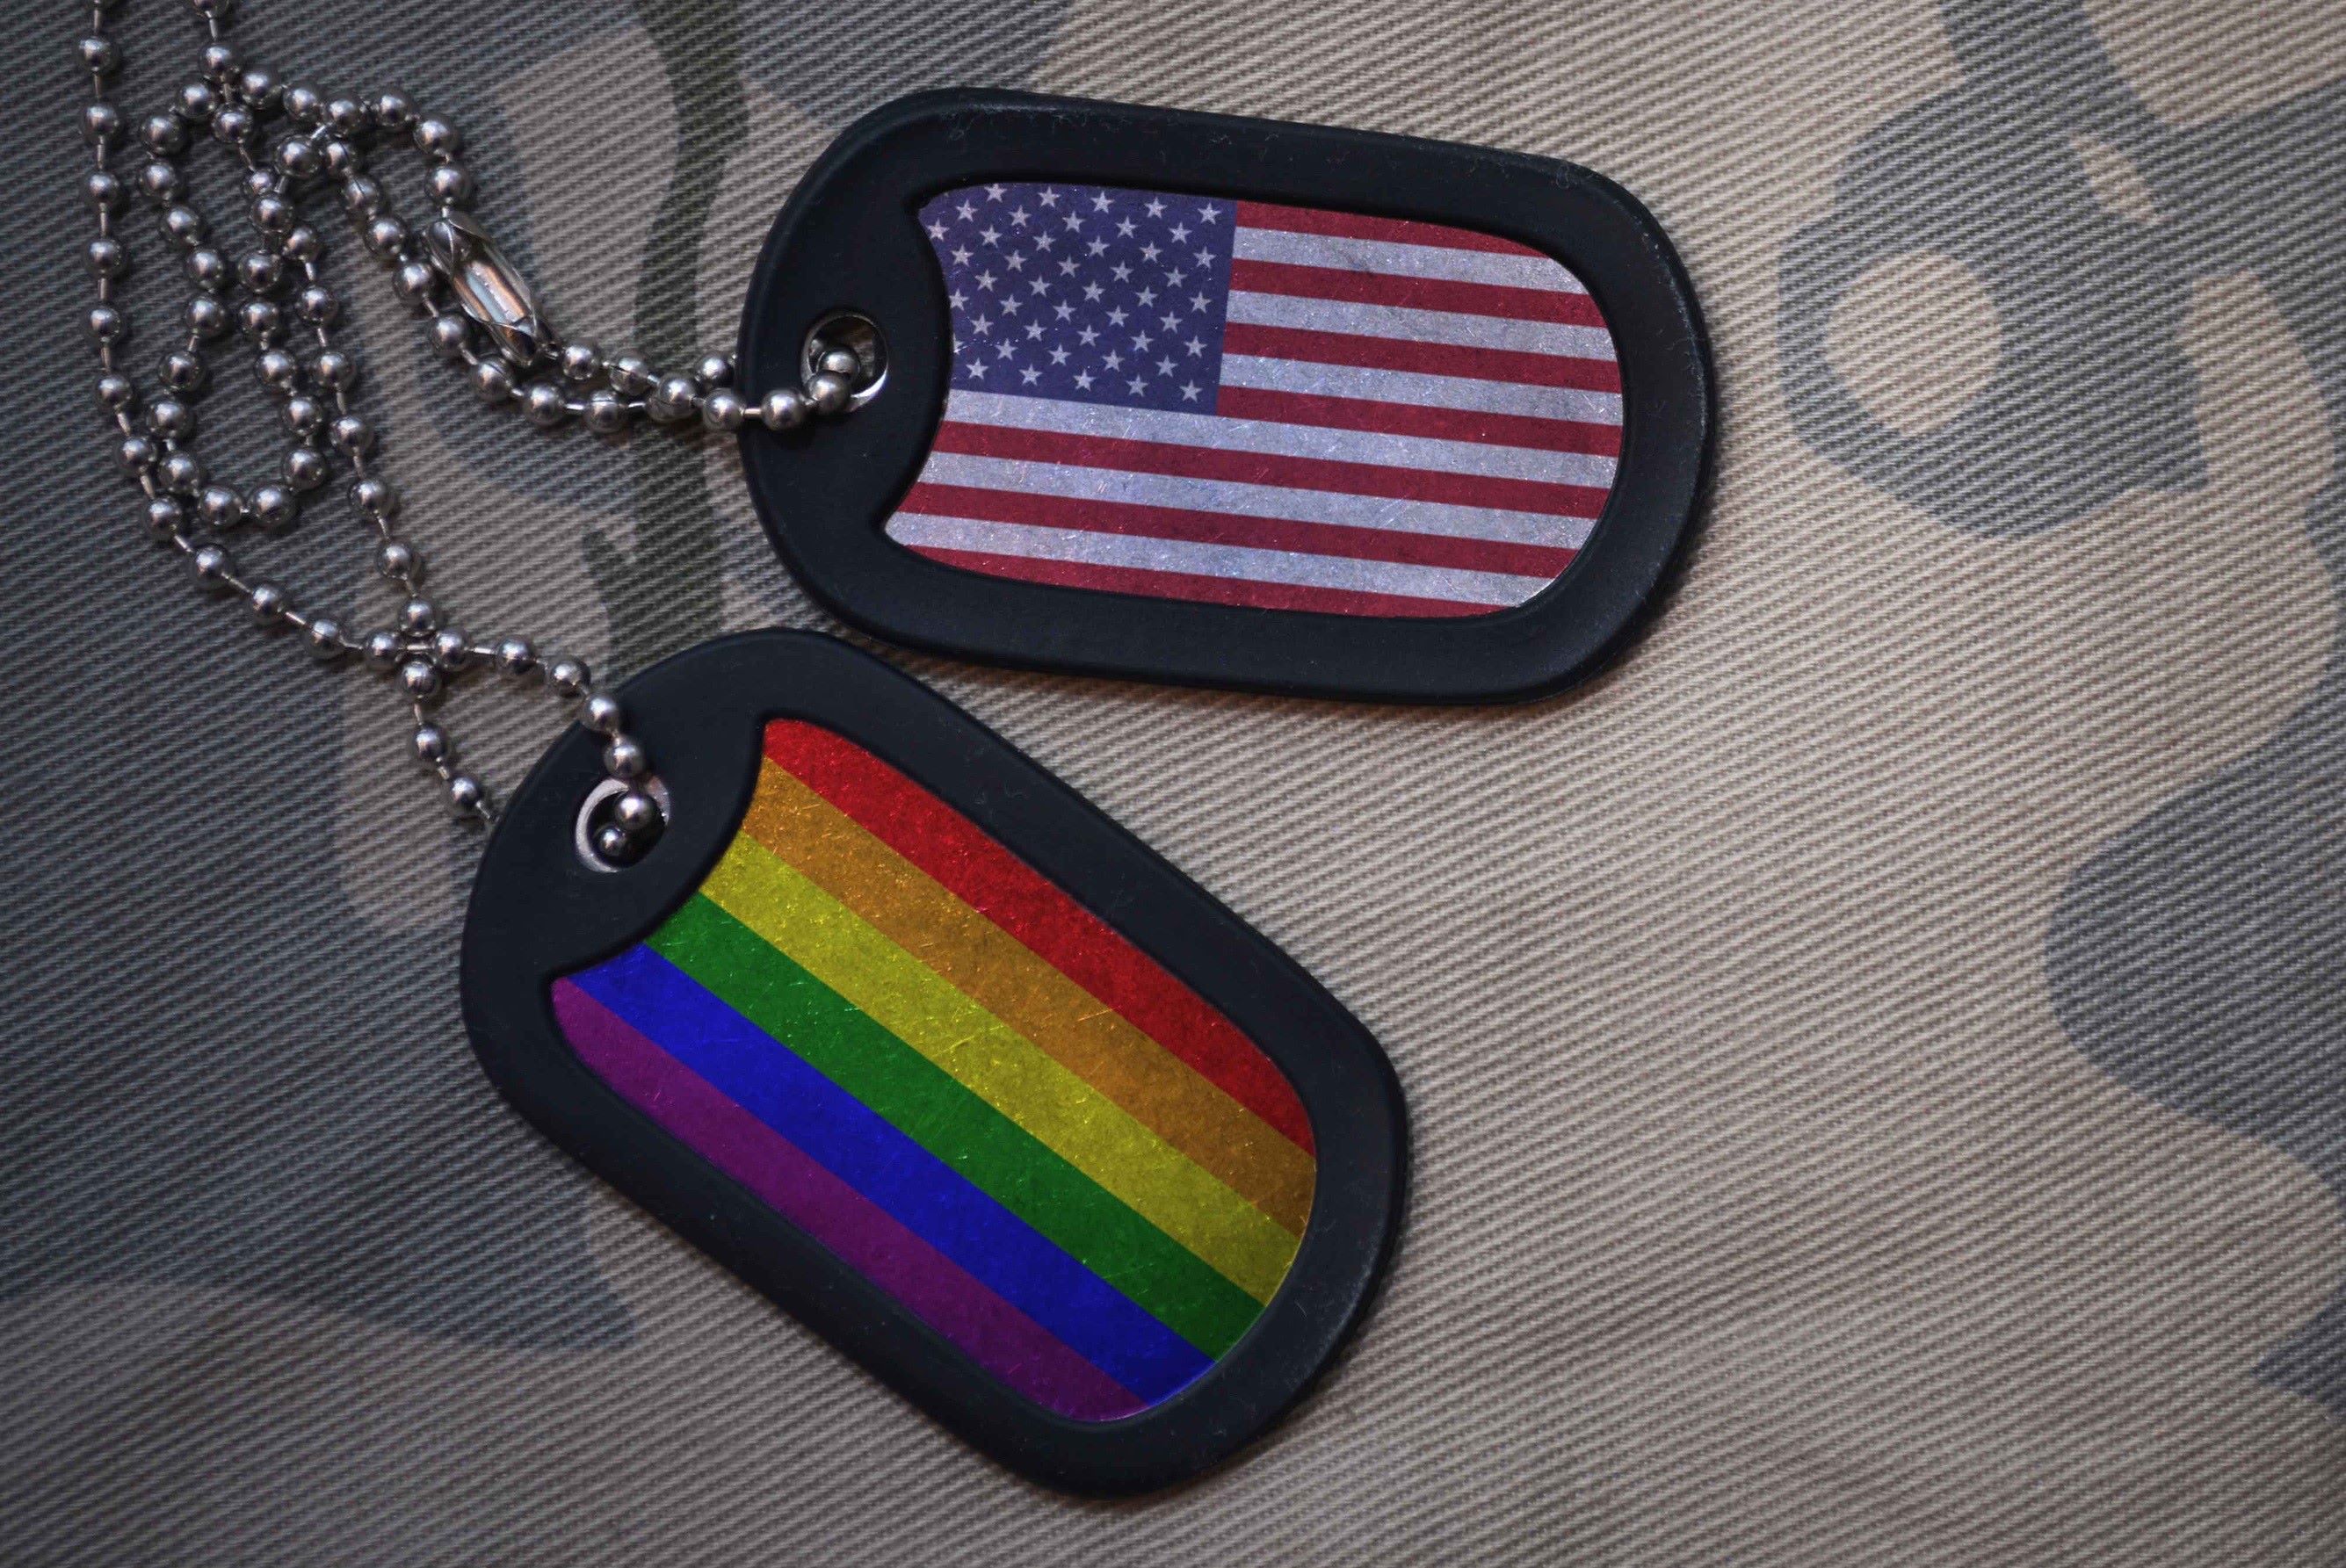 Pentagon officials concerned over attacks on LGBTQ rights